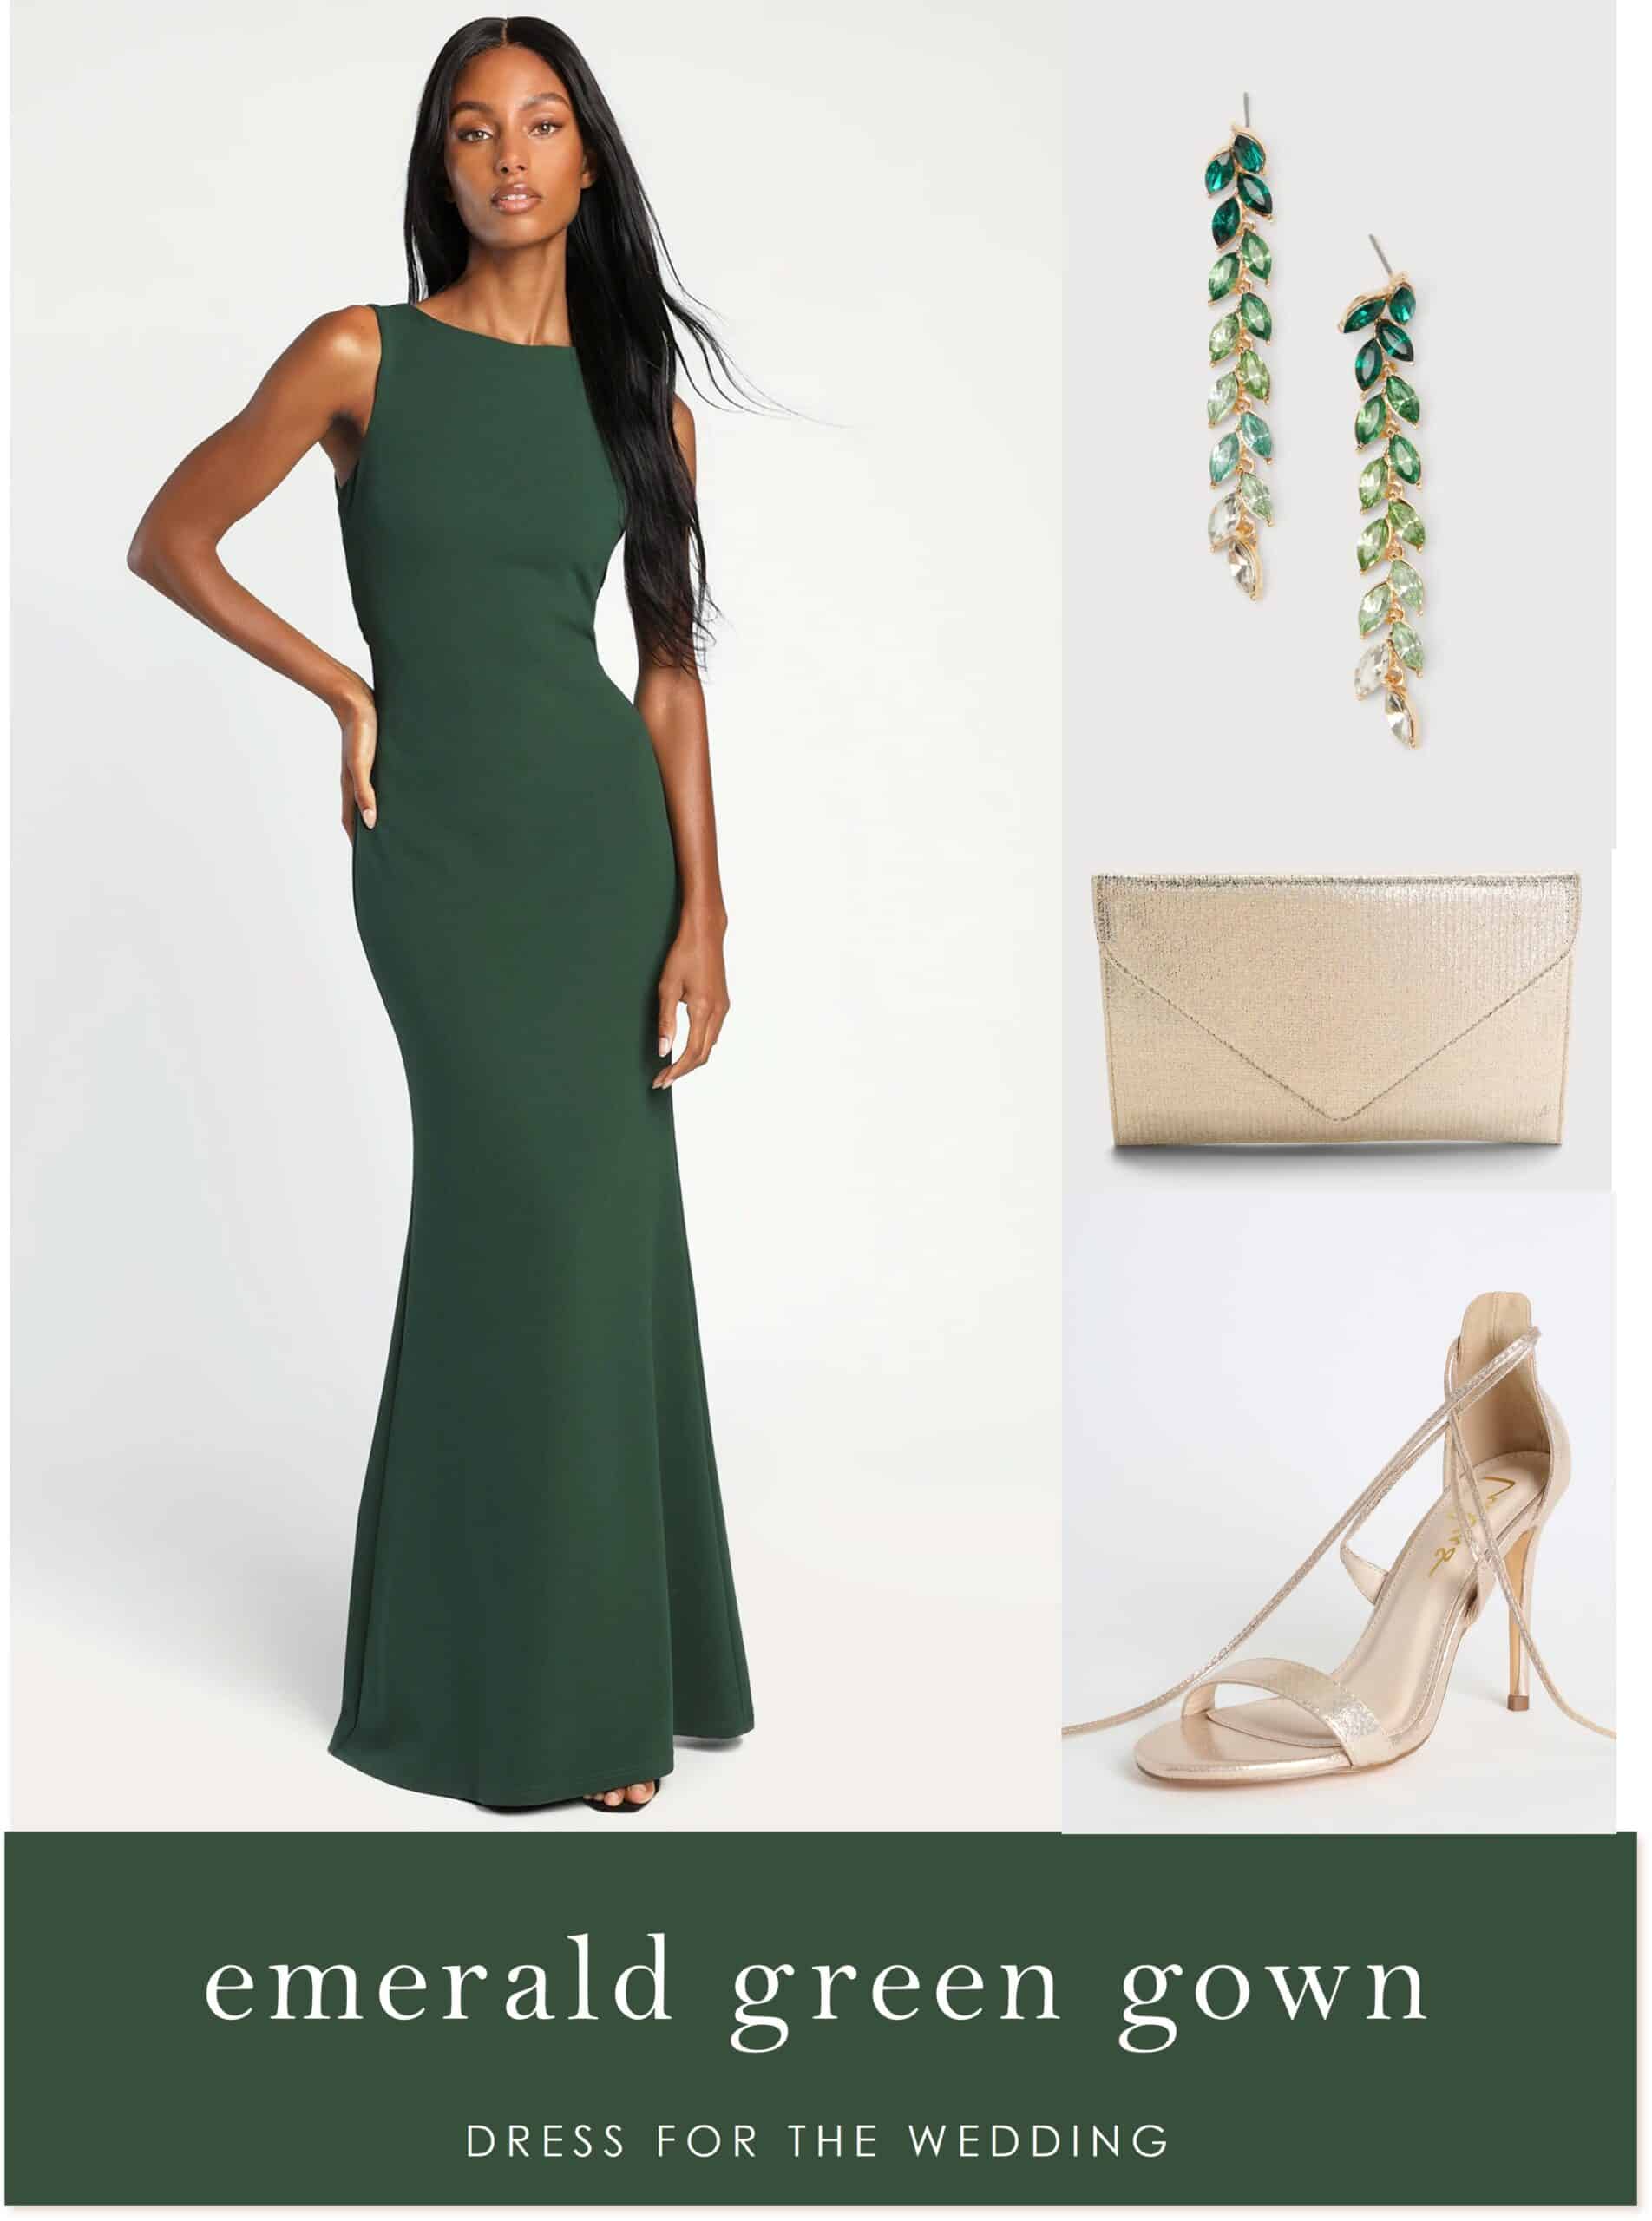 green dress to wear to wedding